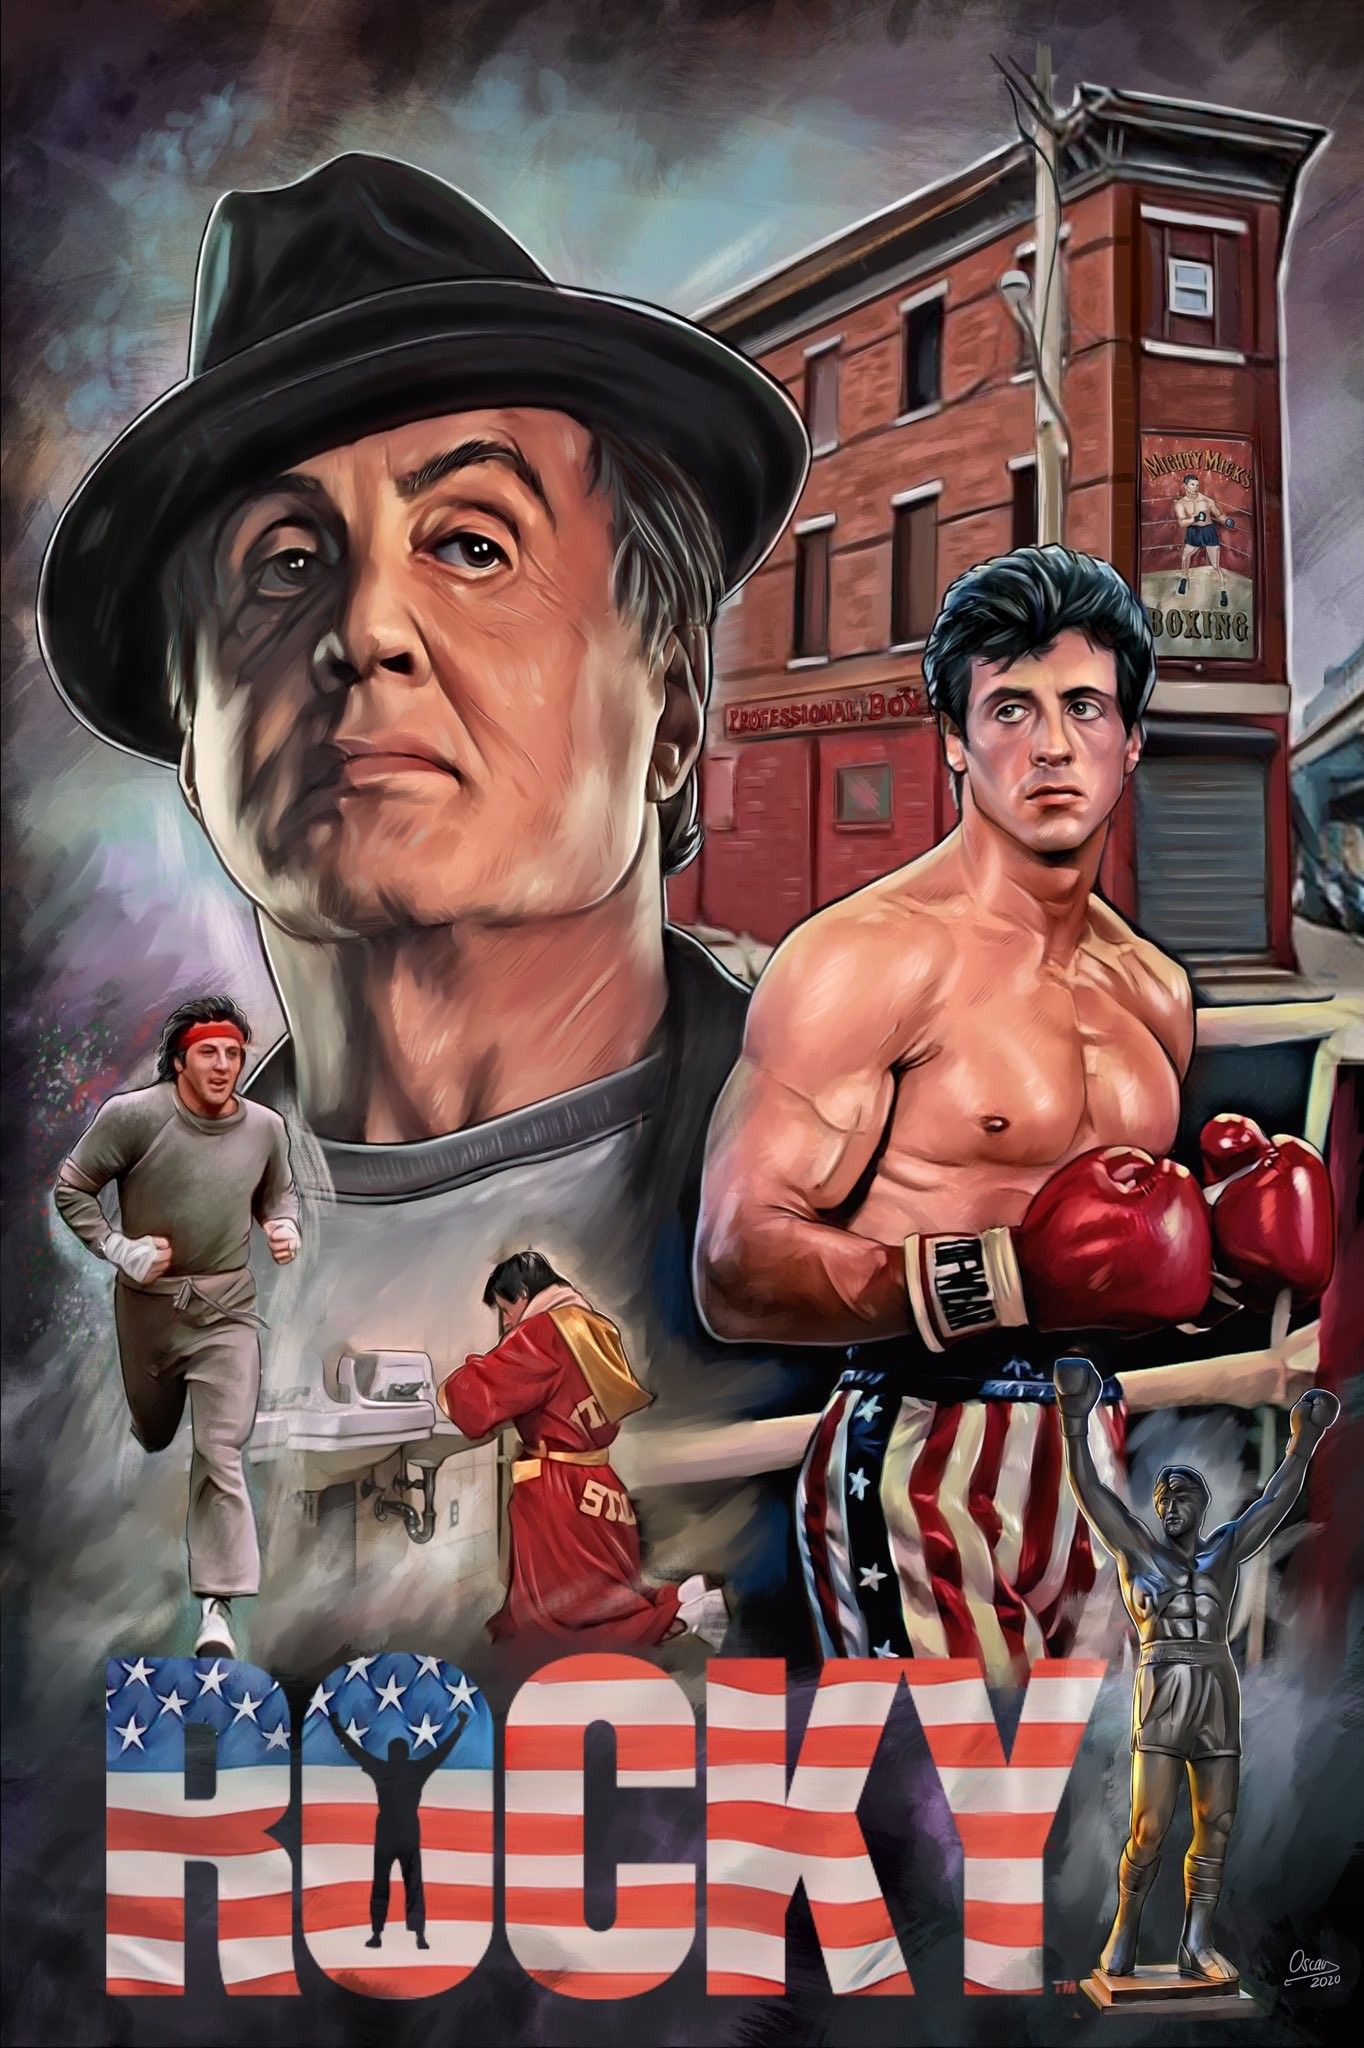 Rocky Balboa Wallpaper 65 images